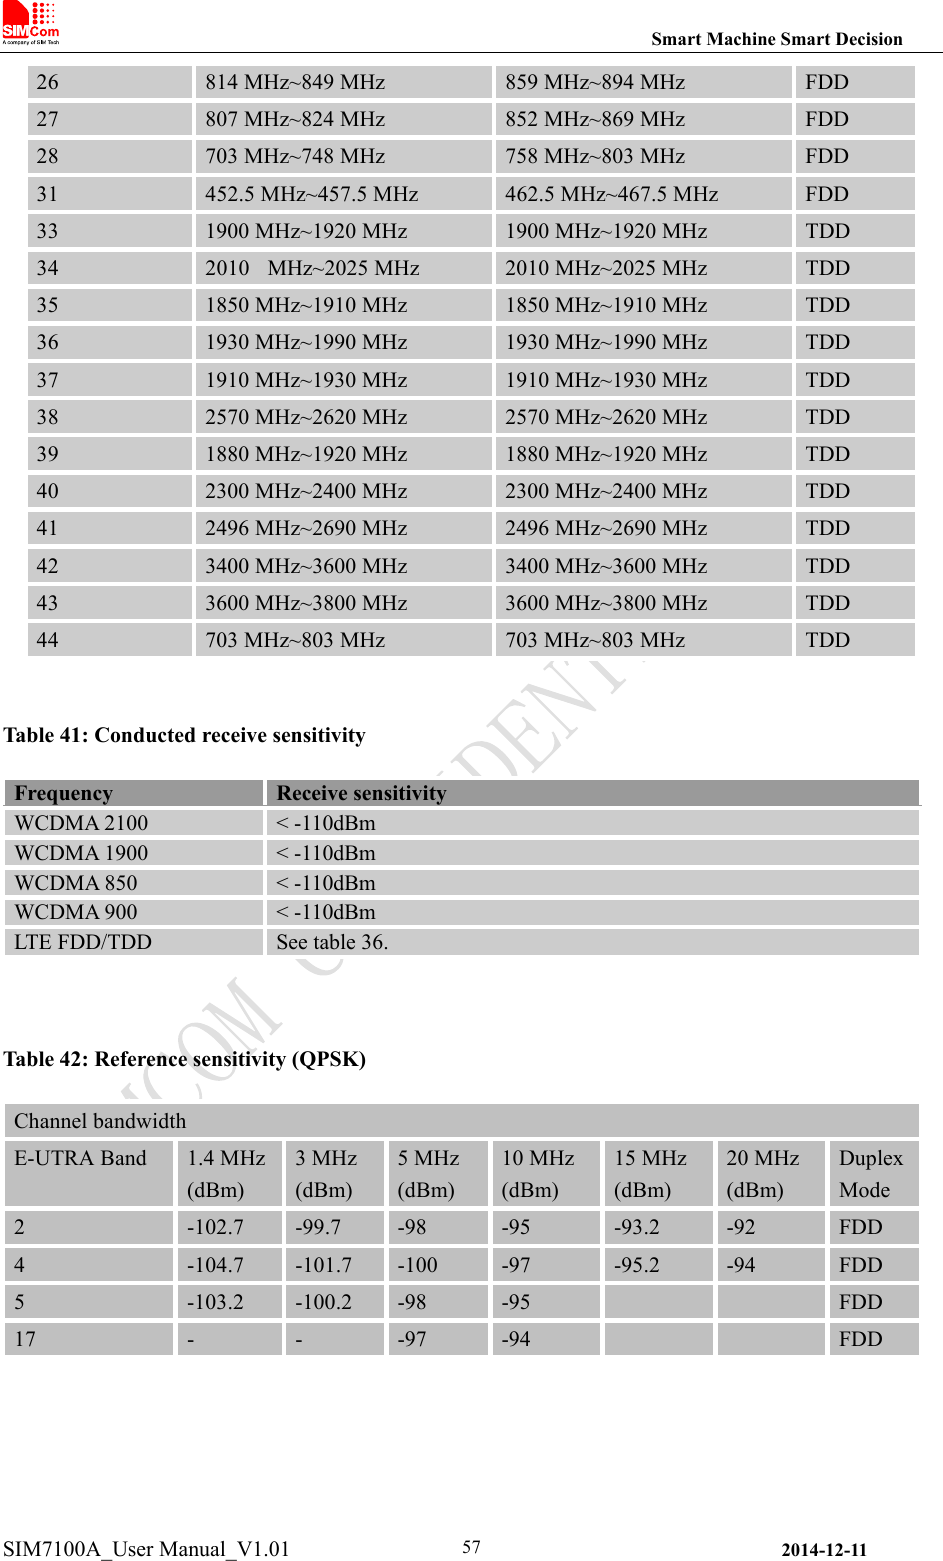                                                                Smart Machine Smart Decision SIM7100A_User Manual_V1.01                2014-12-11 5726  814 MHz~849 MHz  859 MHz~894 MHz  FDD 27  807 MHz~824 MHz  852 MHz~869 MHz  FDD 28  703 MHz~748 MHz  758 MHz~803 MHz  FDD 31  452.5 MHz~457.5 MHz  462.5 MHz~467.5 MHz  FDD 33  1900 MHz~1920 MHz  1900 MHz~1920 MHz  TDD 34  2010    MHz~2025 MHz  2010 MHz~2025 MHz  TDD 35  1850 MHz~1910 MHz  1850 MHz~1910 MHz  TDD 36  1930 MHz~1990 MHz  1930 MHz~1990 MHz  TDD 37  1910 MHz~1930 MHz  1910 MHz~1930 MHz  TDD 38  2570 MHz~2620 MHz  2570 MHz~2620 MHz  TDD 39  1880 MHz~1920 MHz  1880 MHz~1920 MHz  TDD 40  2300 MHz~2400 MHz  2300 MHz~2400 MHz  TDD 41  2496 MHz~2690 MHz  2496 MHz~2690 MHz  TDD 42  3400 MHz~3600 MHz  3400 MHz~3600 MHz  TDD 43  3600 MHz~3800 MHz  3600 MHz~3800 MHz  TDD 44  703 MHz~803 MHz  703 MHz~803 MHz  TDD  Table 41: Conducted receive sensitivity Frequency  Receive sensitivity WCDMA 2100  &lt; -110dBm WCDMA 1900  &lt; -110dBm WCDMA 850  &lt; -110dBm WCDMA 900  &lt; -110dBm LTE FDD/TDD  See table 36.  Table 42: Reference sensitivity (QPSK)   Channel bandwidth E-UTRA Band  1.4 MHz (dBm) 3 MHz (dBm) 5 MHz (dBm) 10 MHz (dBm) 15 MHz (dBm) 20 MHz (dBm) Duplex Mode 2  -102.7  -99.7  -98    -95  -93.2  -92  FDD 4  -104.7  -101.7  -100  -97  -95.2  -94  FDD 5  -103.2  -100.2  -98  -95    FDD 17  -  -  -97  -94    FDD 